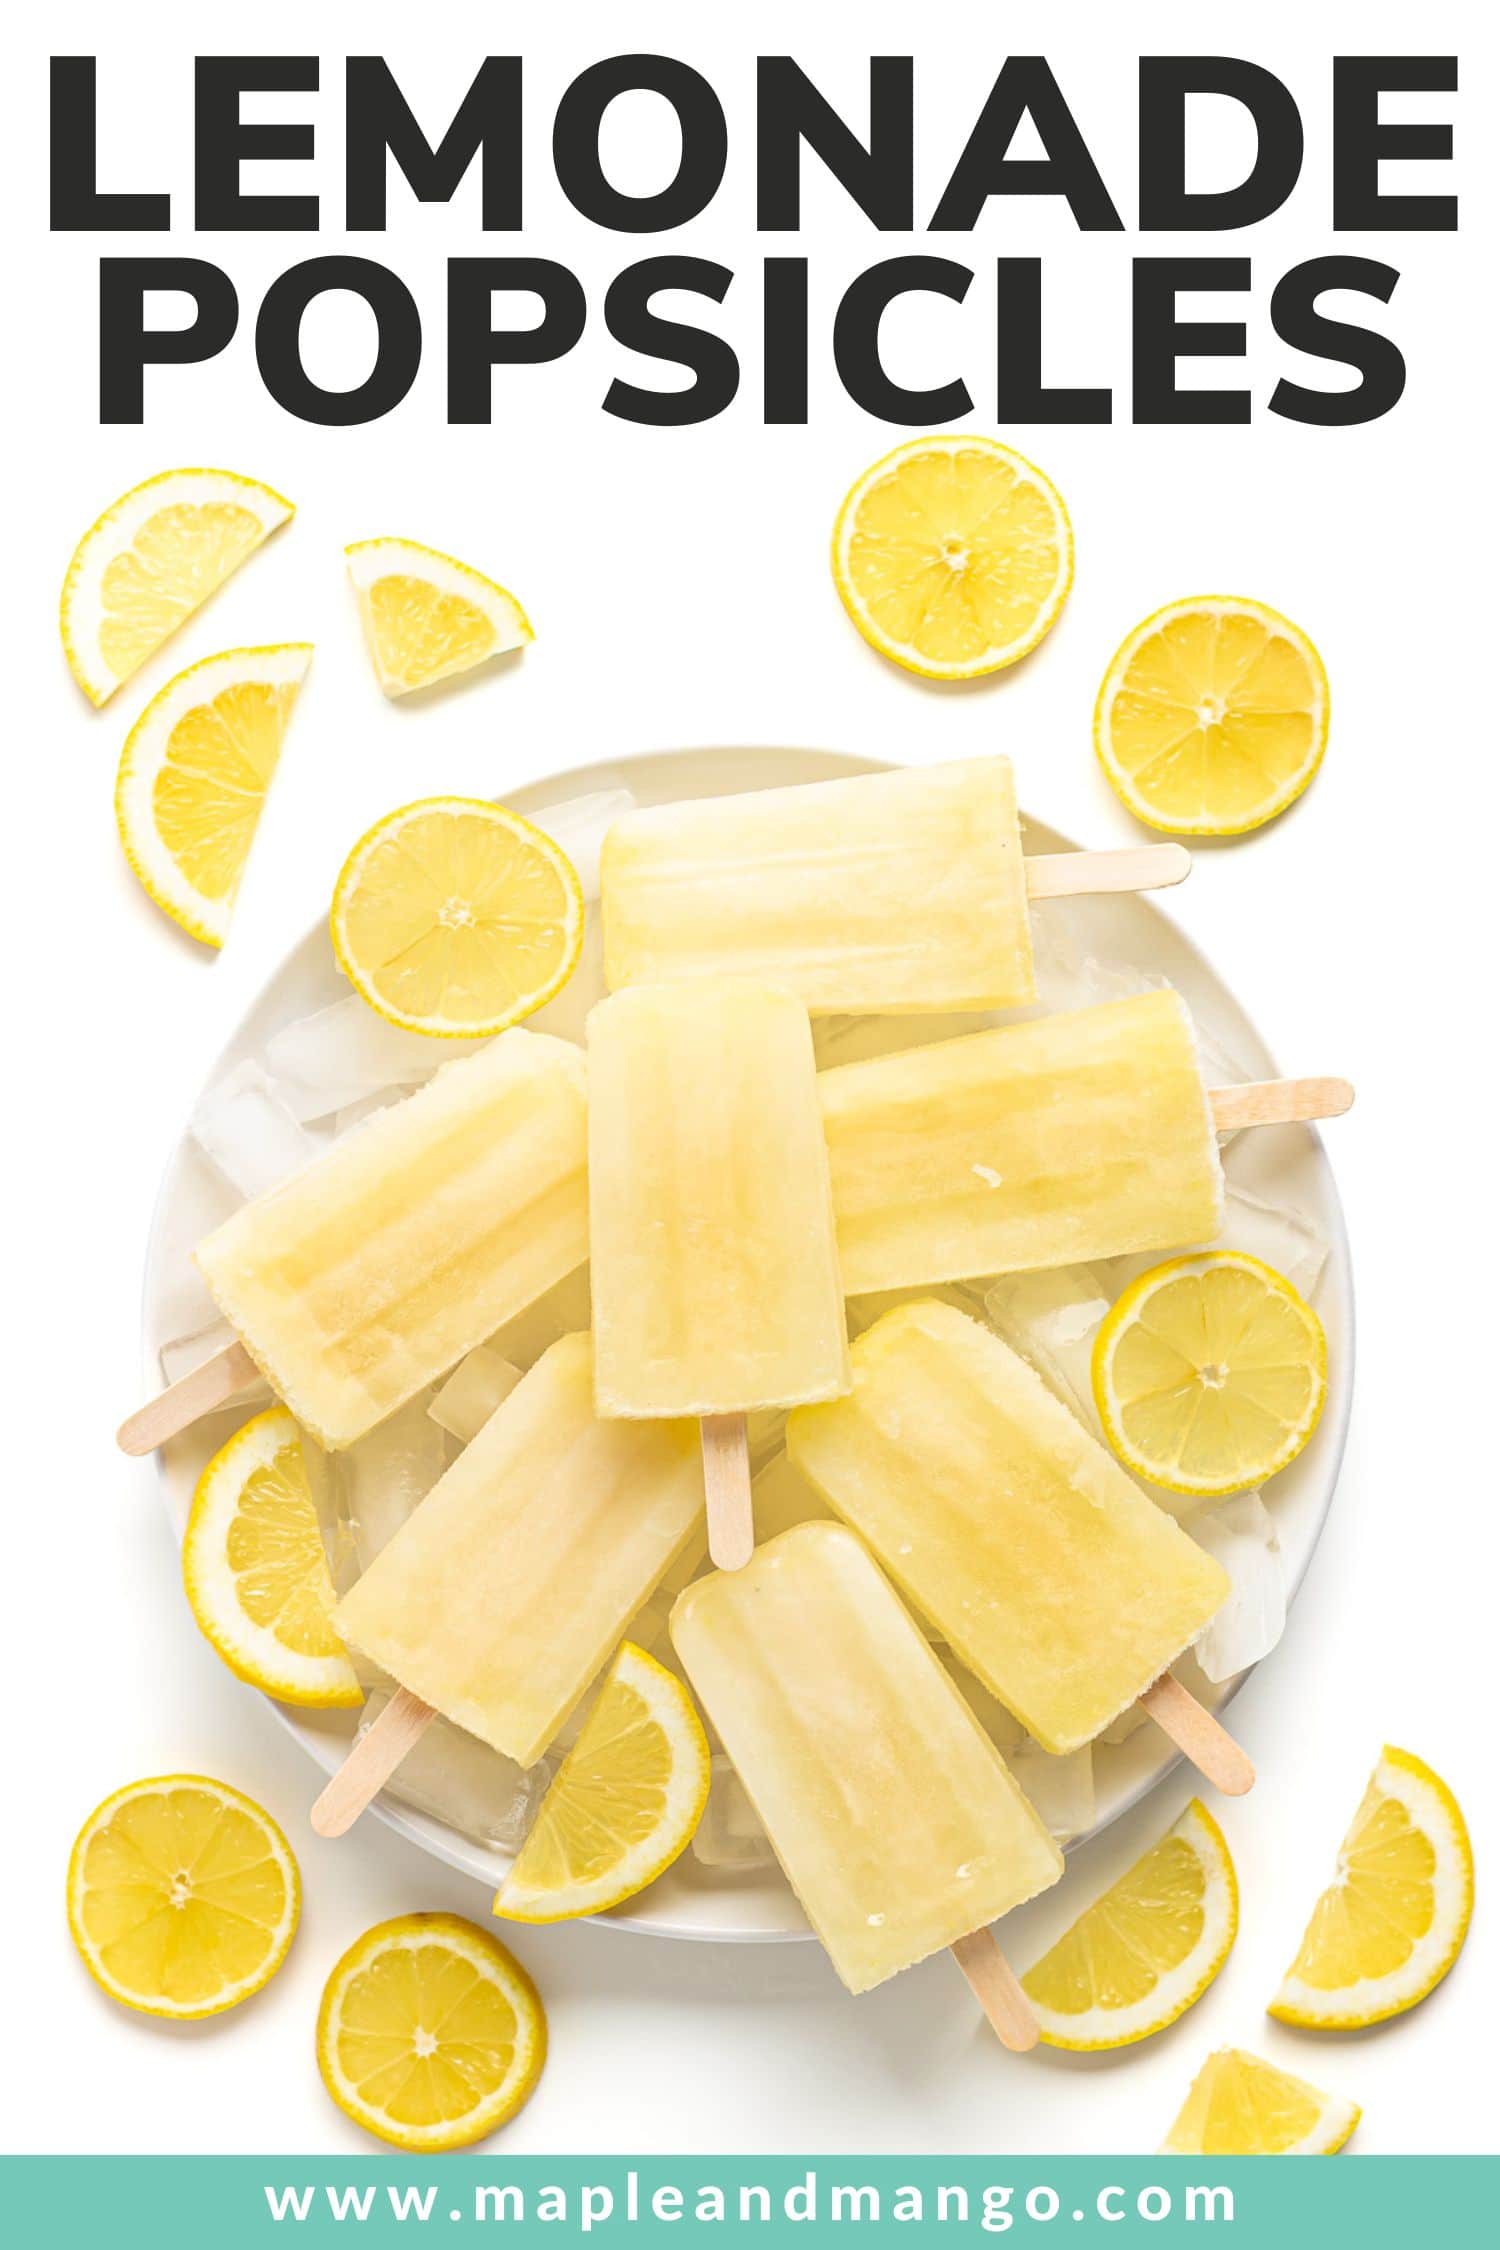 Plate of lemonade popsicles surrounded by sliced lemons and text overlay that reads  "Lemonade Popsicles".